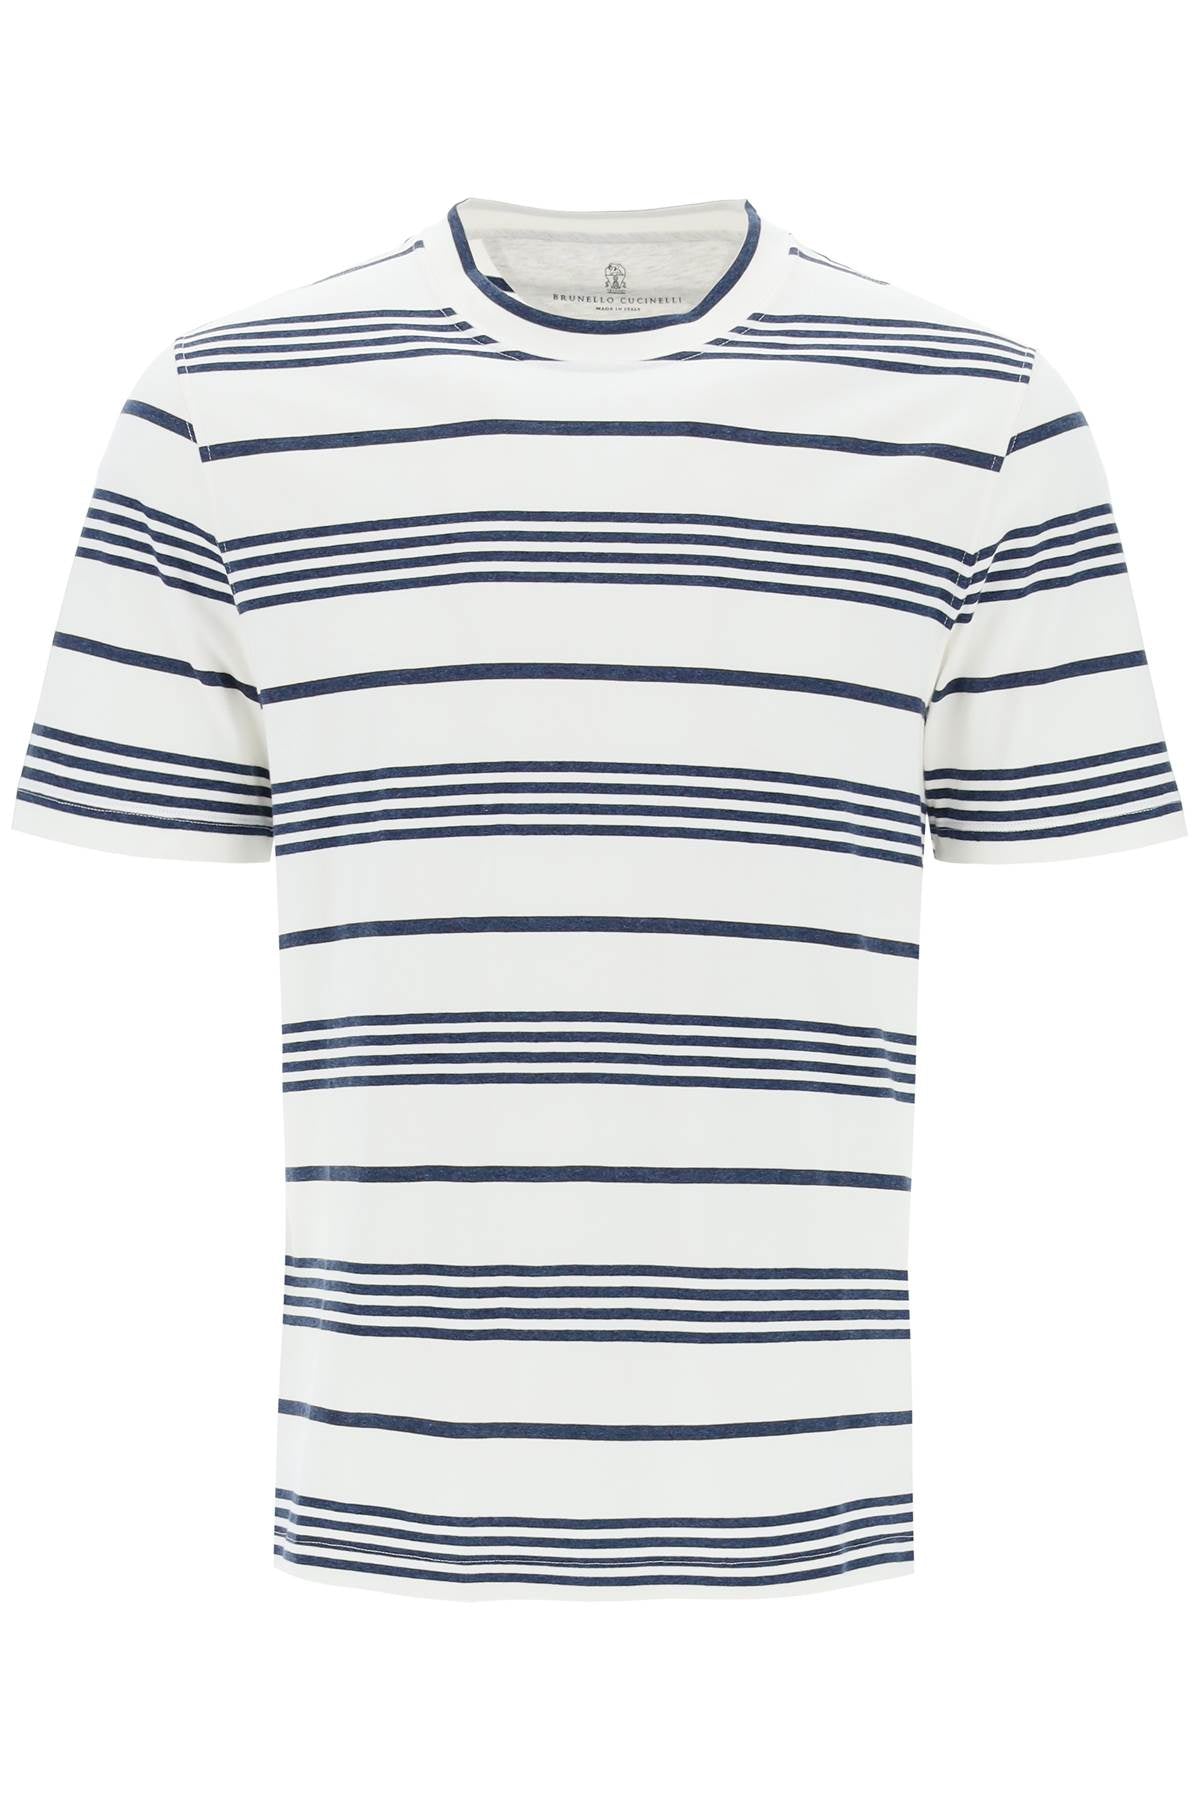 Brunello cucinelli striped crewneck t-shirt-men > clothing > t-shirts and sweatshirts > t-shirts-Brunello Cucinelli-Urbanheer